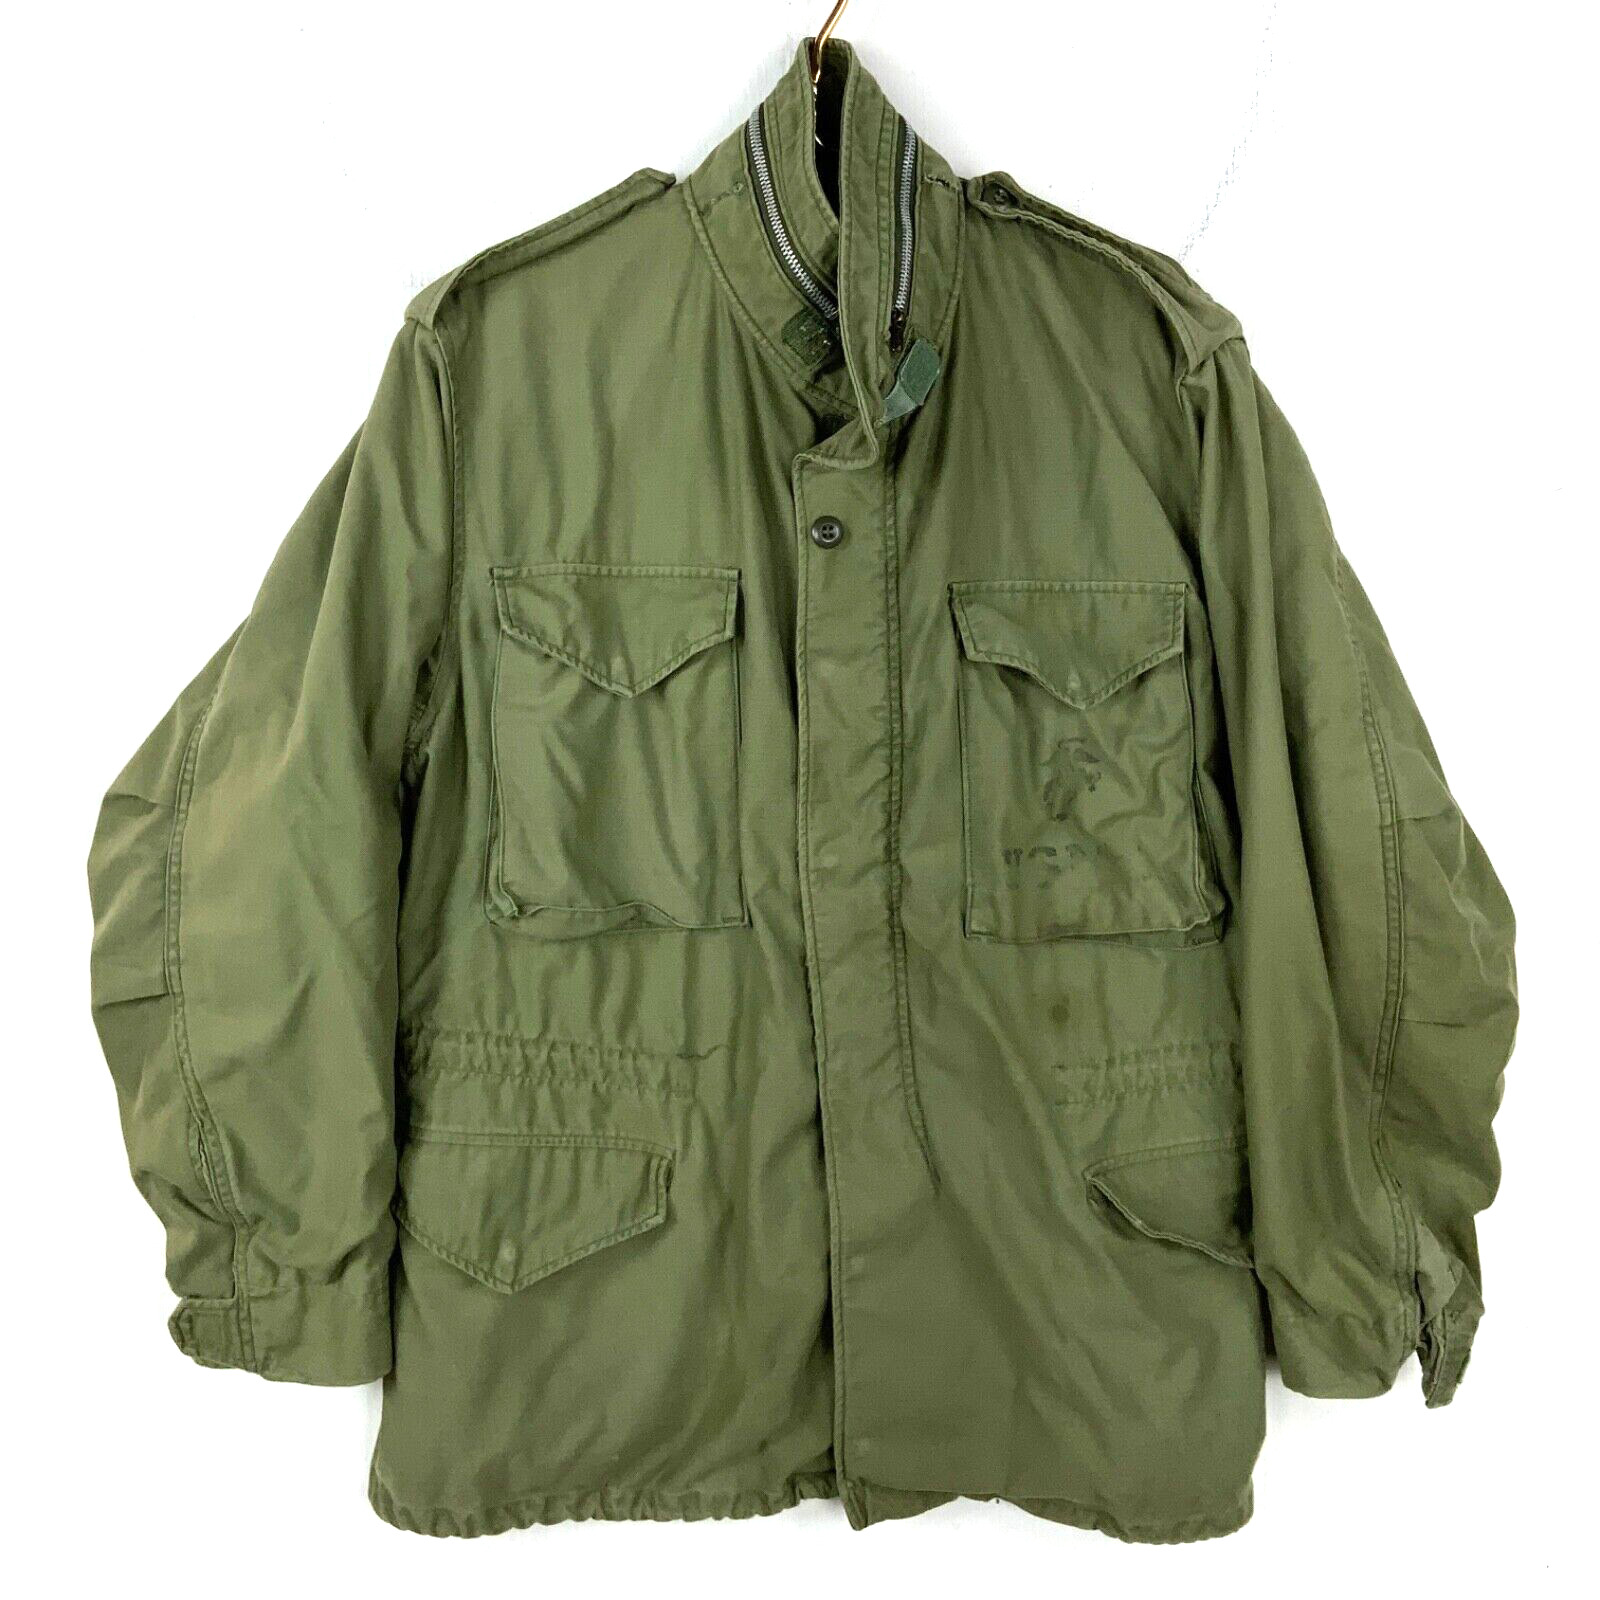 Vintage Usmc Military Field Jacket Lined Size Large Green Vietnam Era 60s